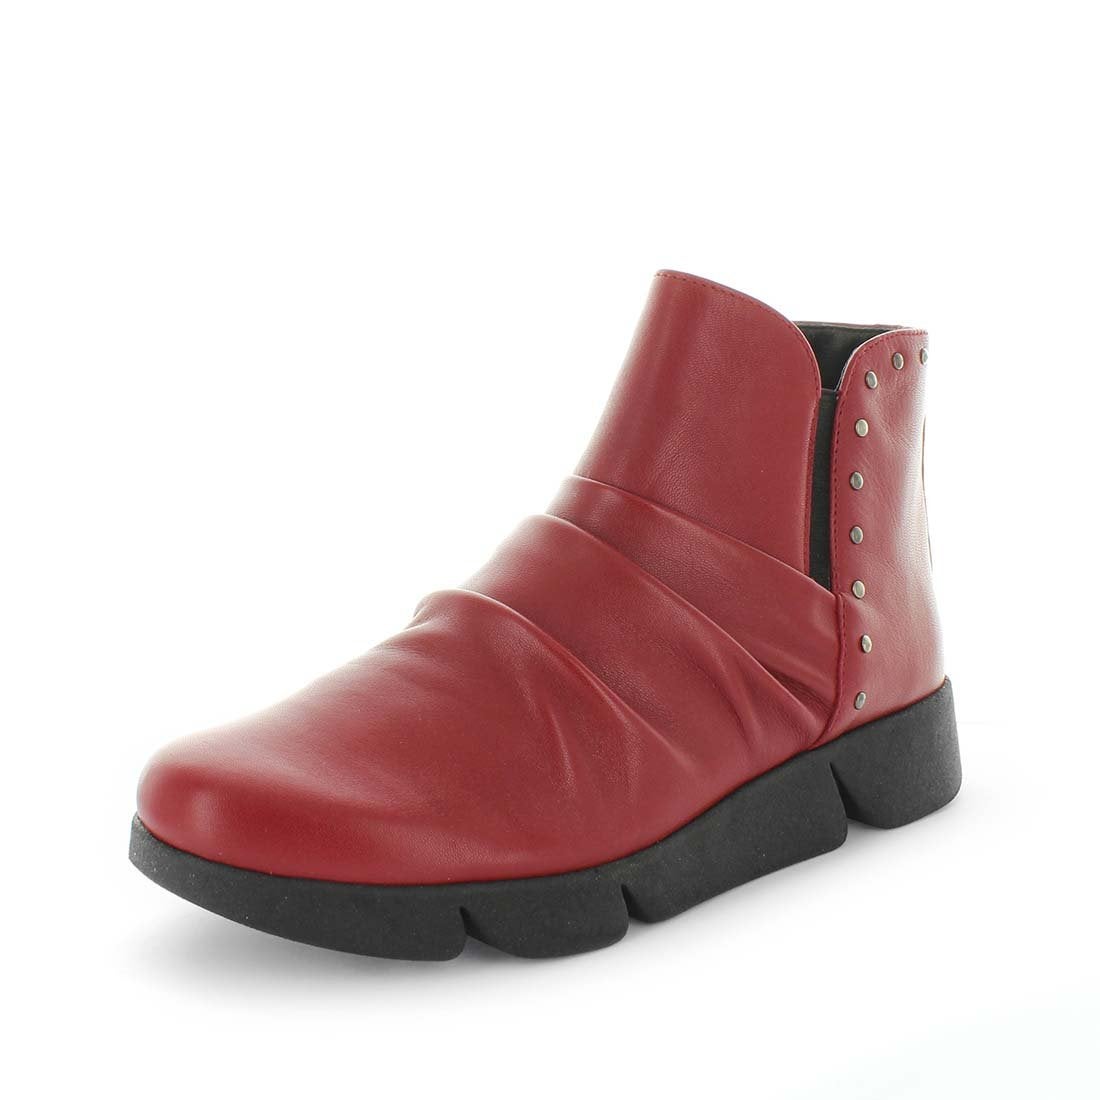 The Flexx Sakura Soft Italian Leather Comfy Women's Boots